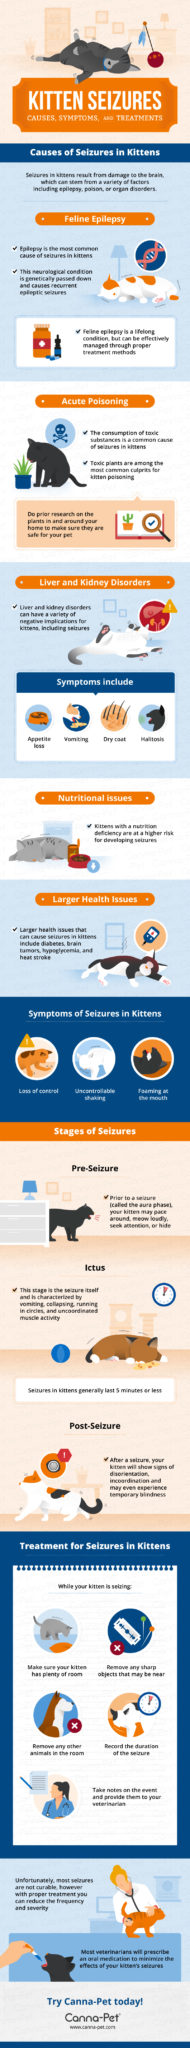 Kitten Seizures Infographic